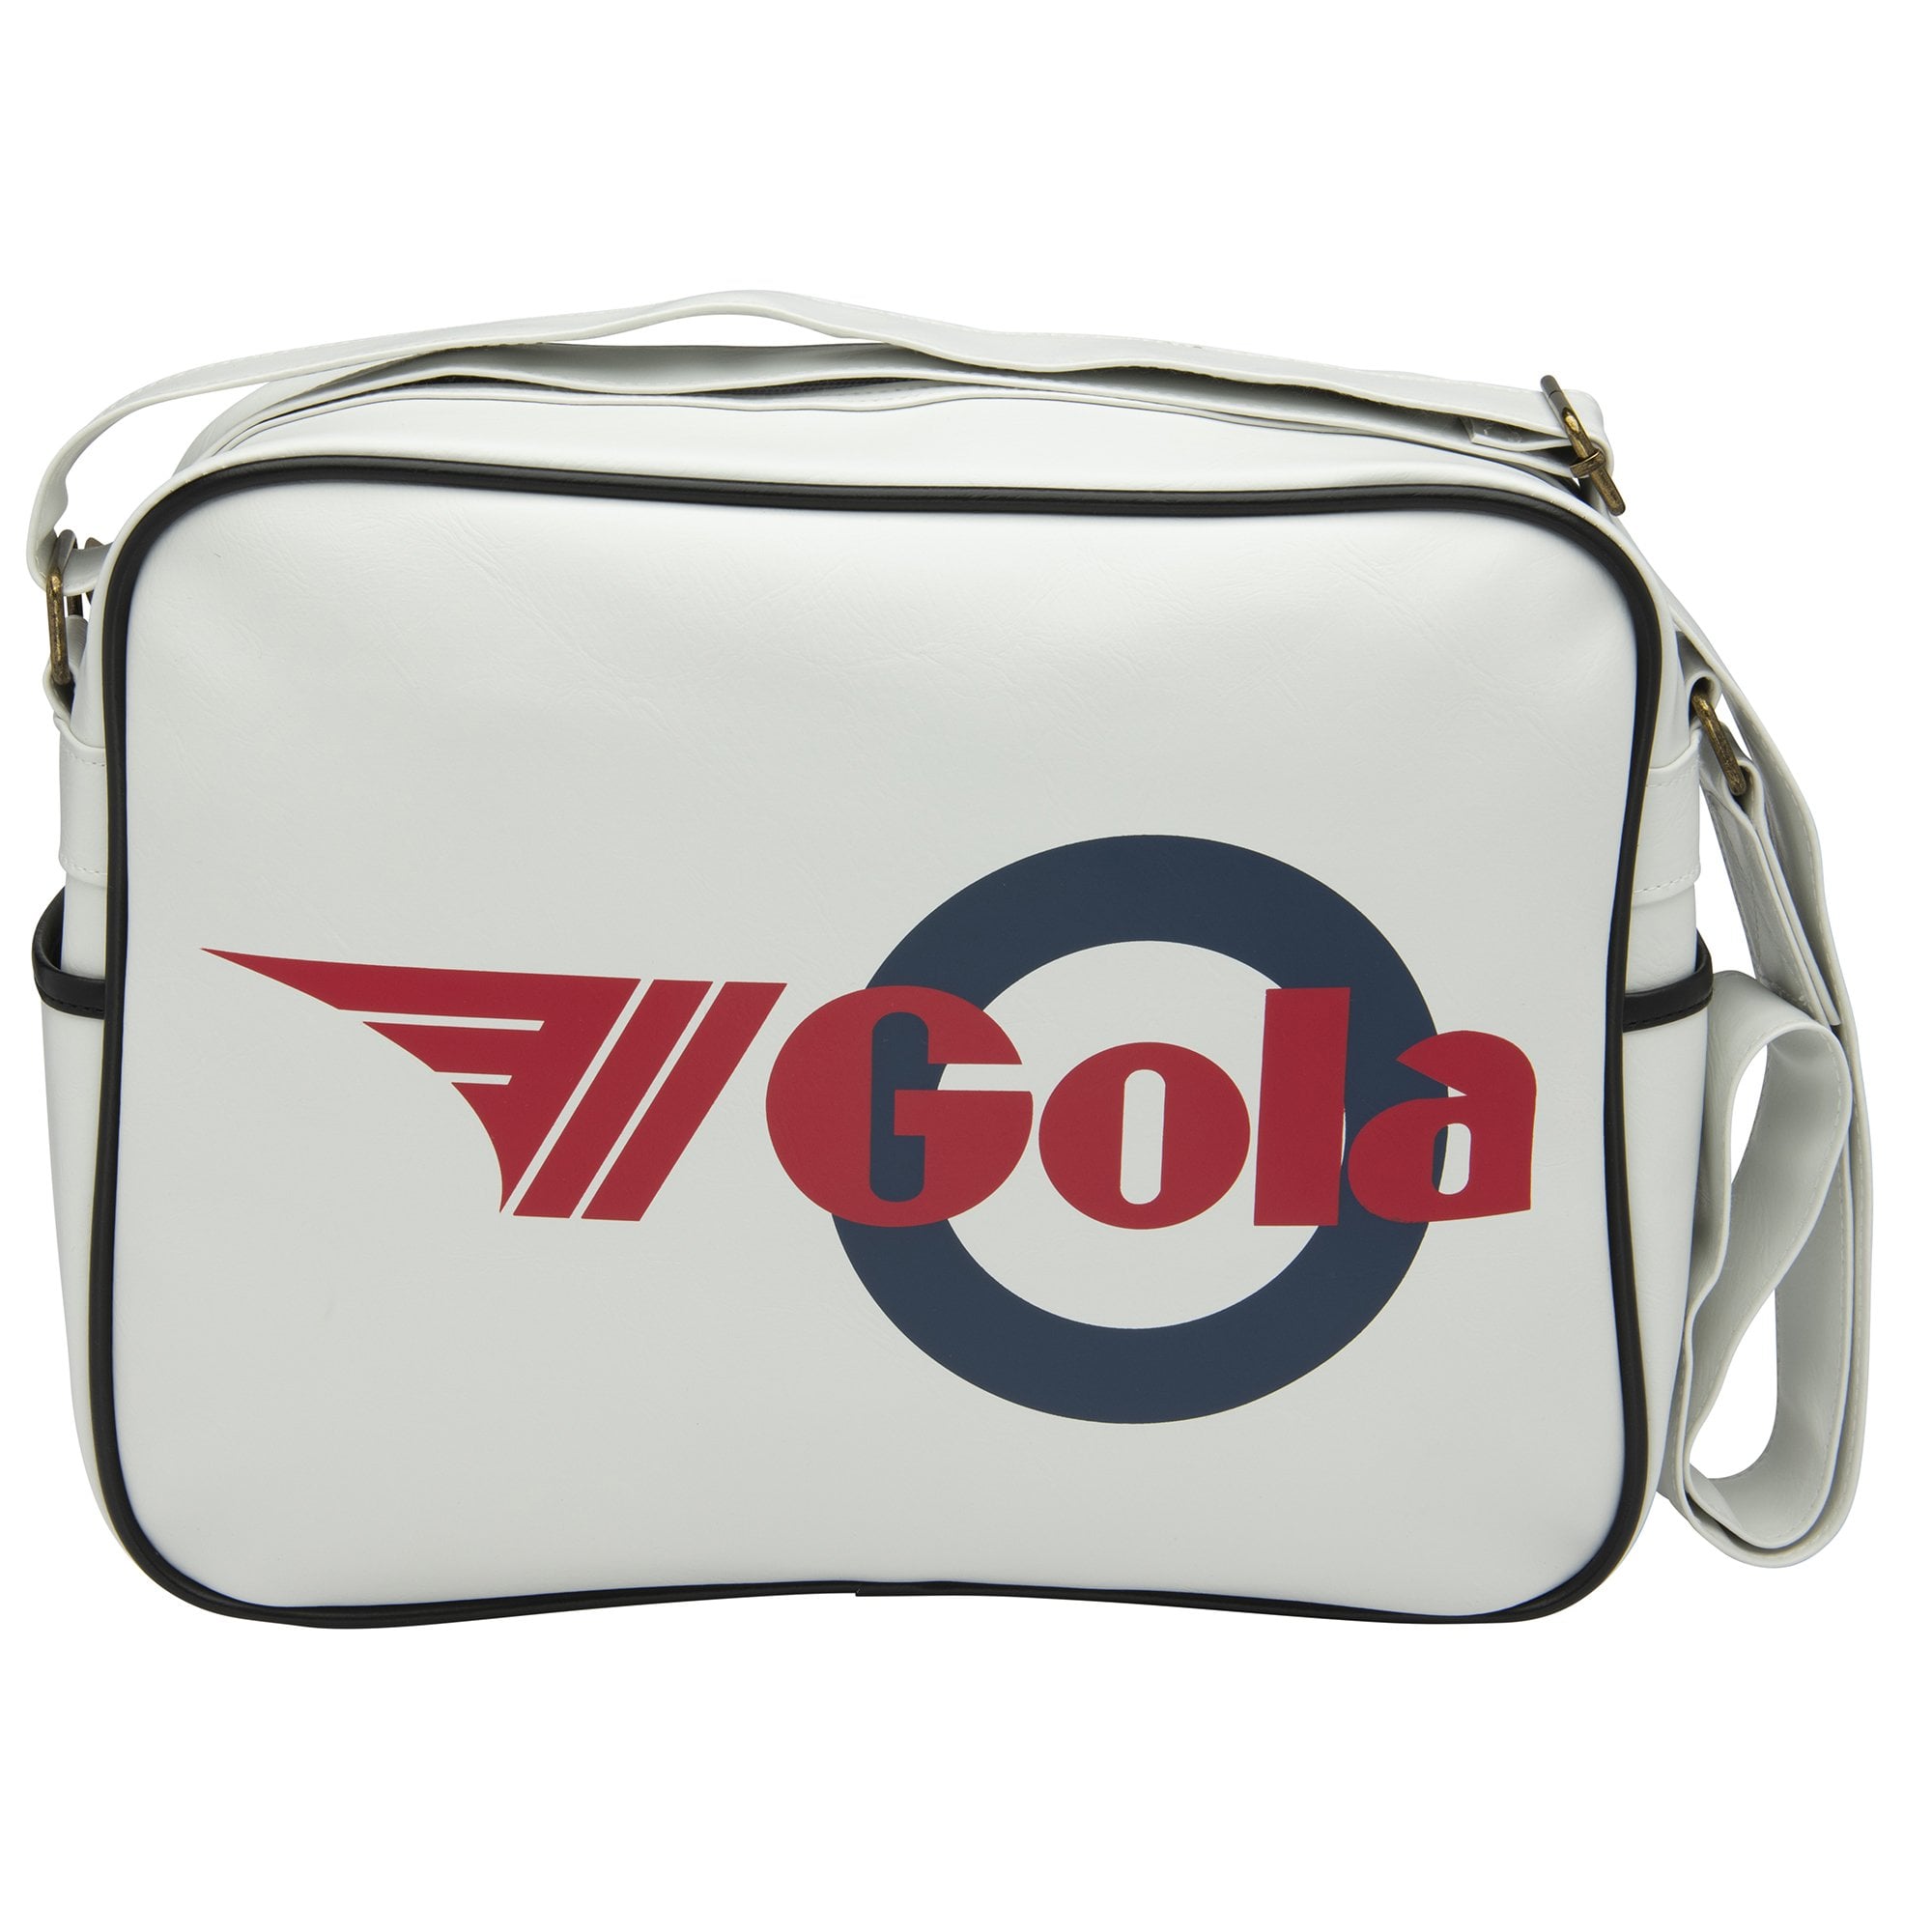 Gola Redford Mod Bag